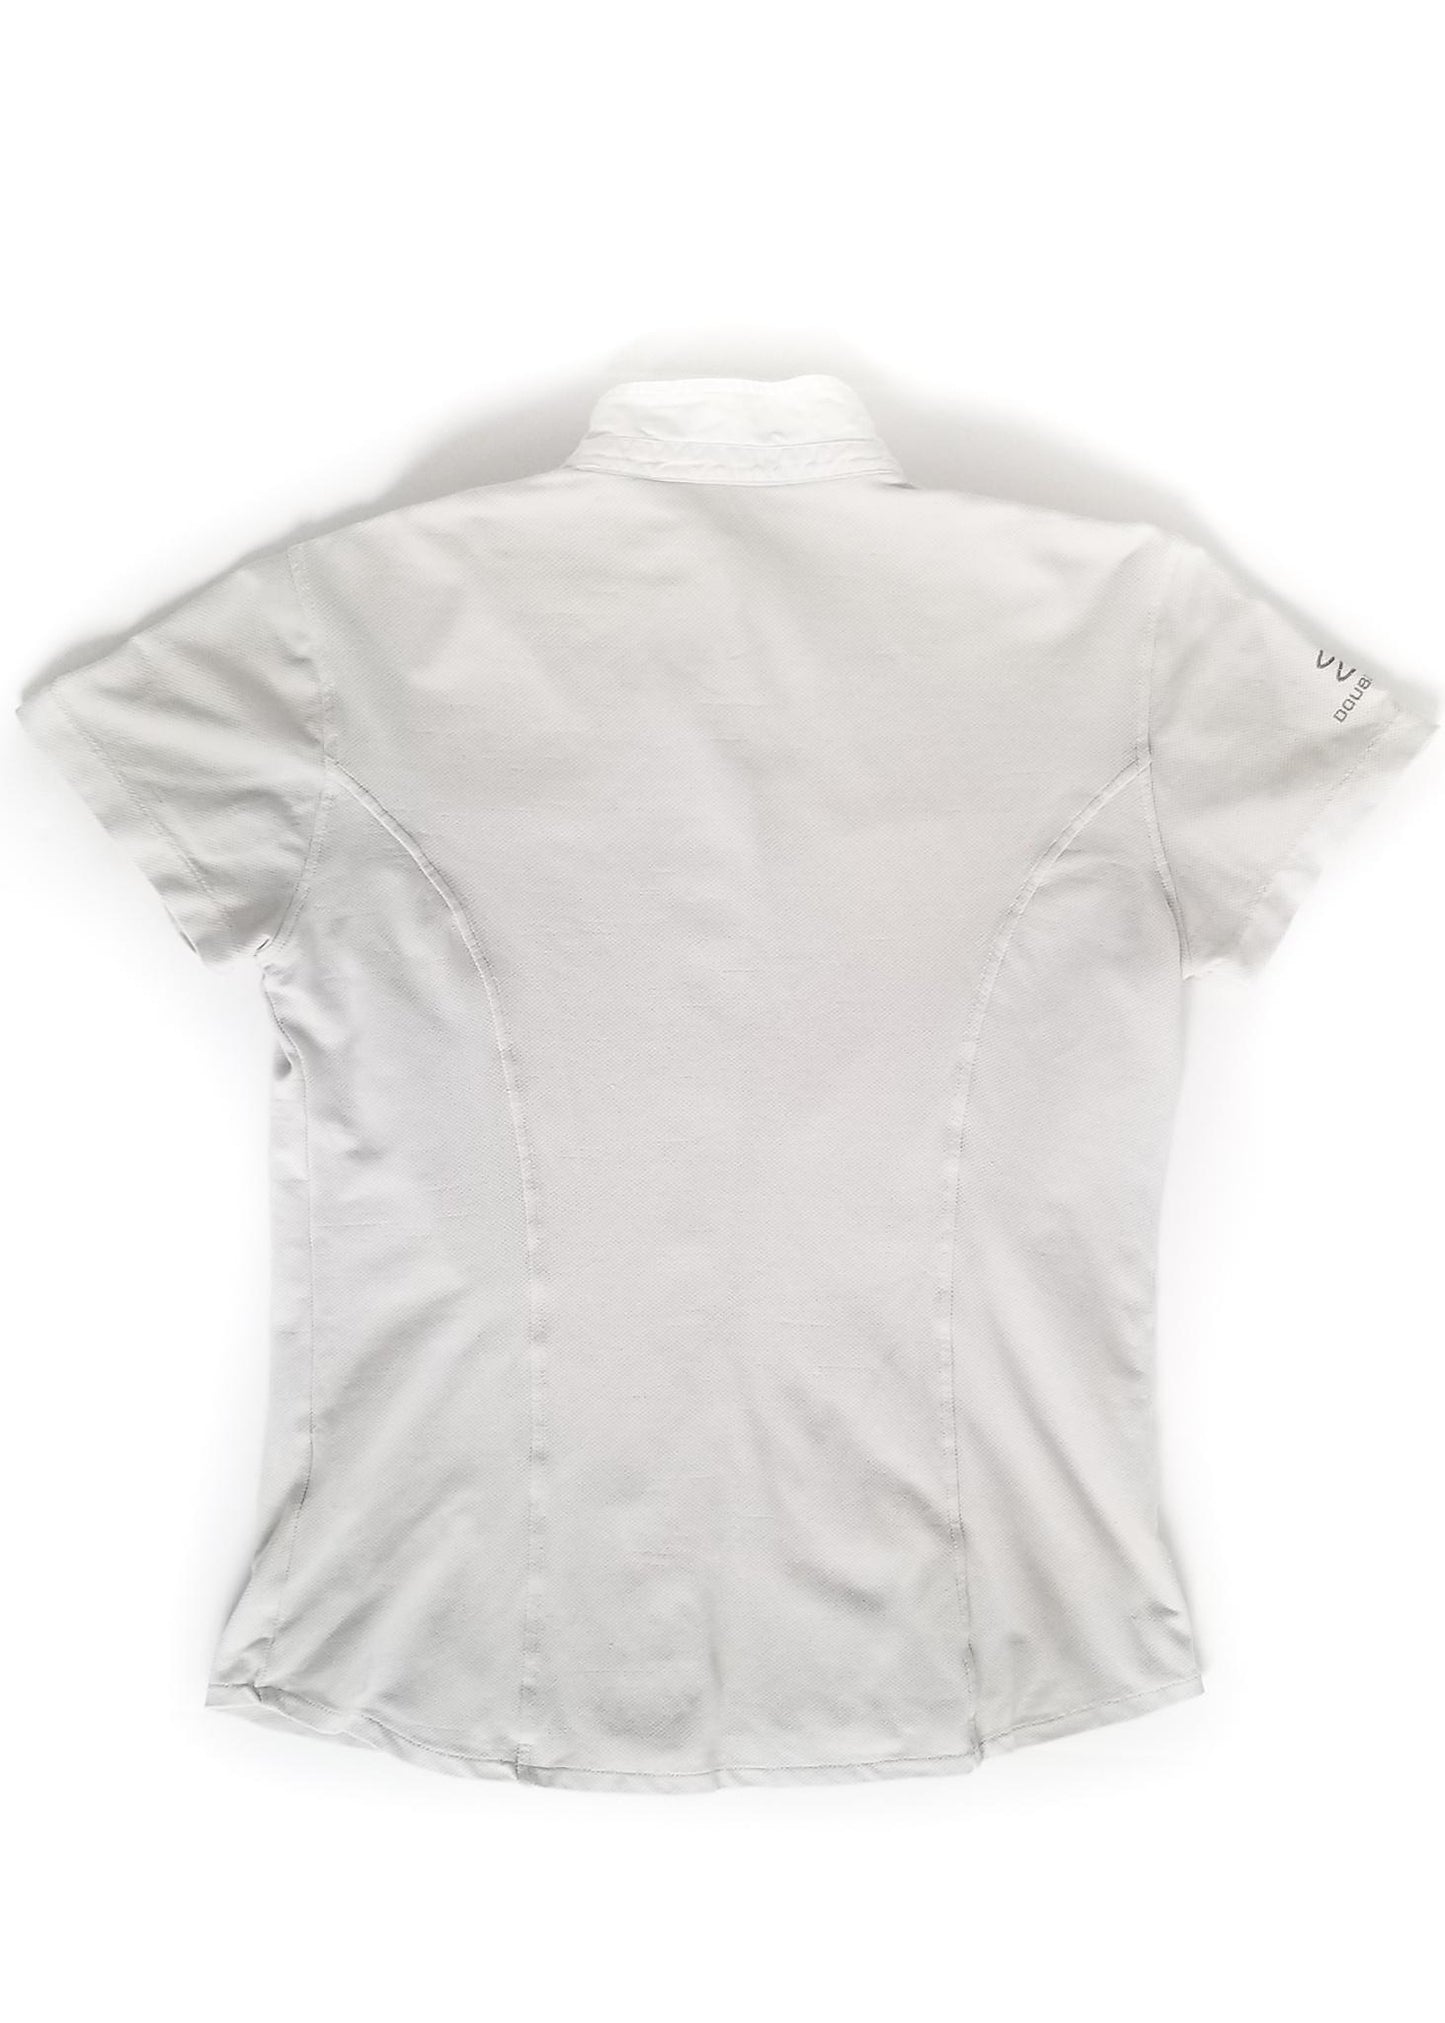 GPA Double Clear Short Sleeve Show Shirt - Light Grey - Women's Large